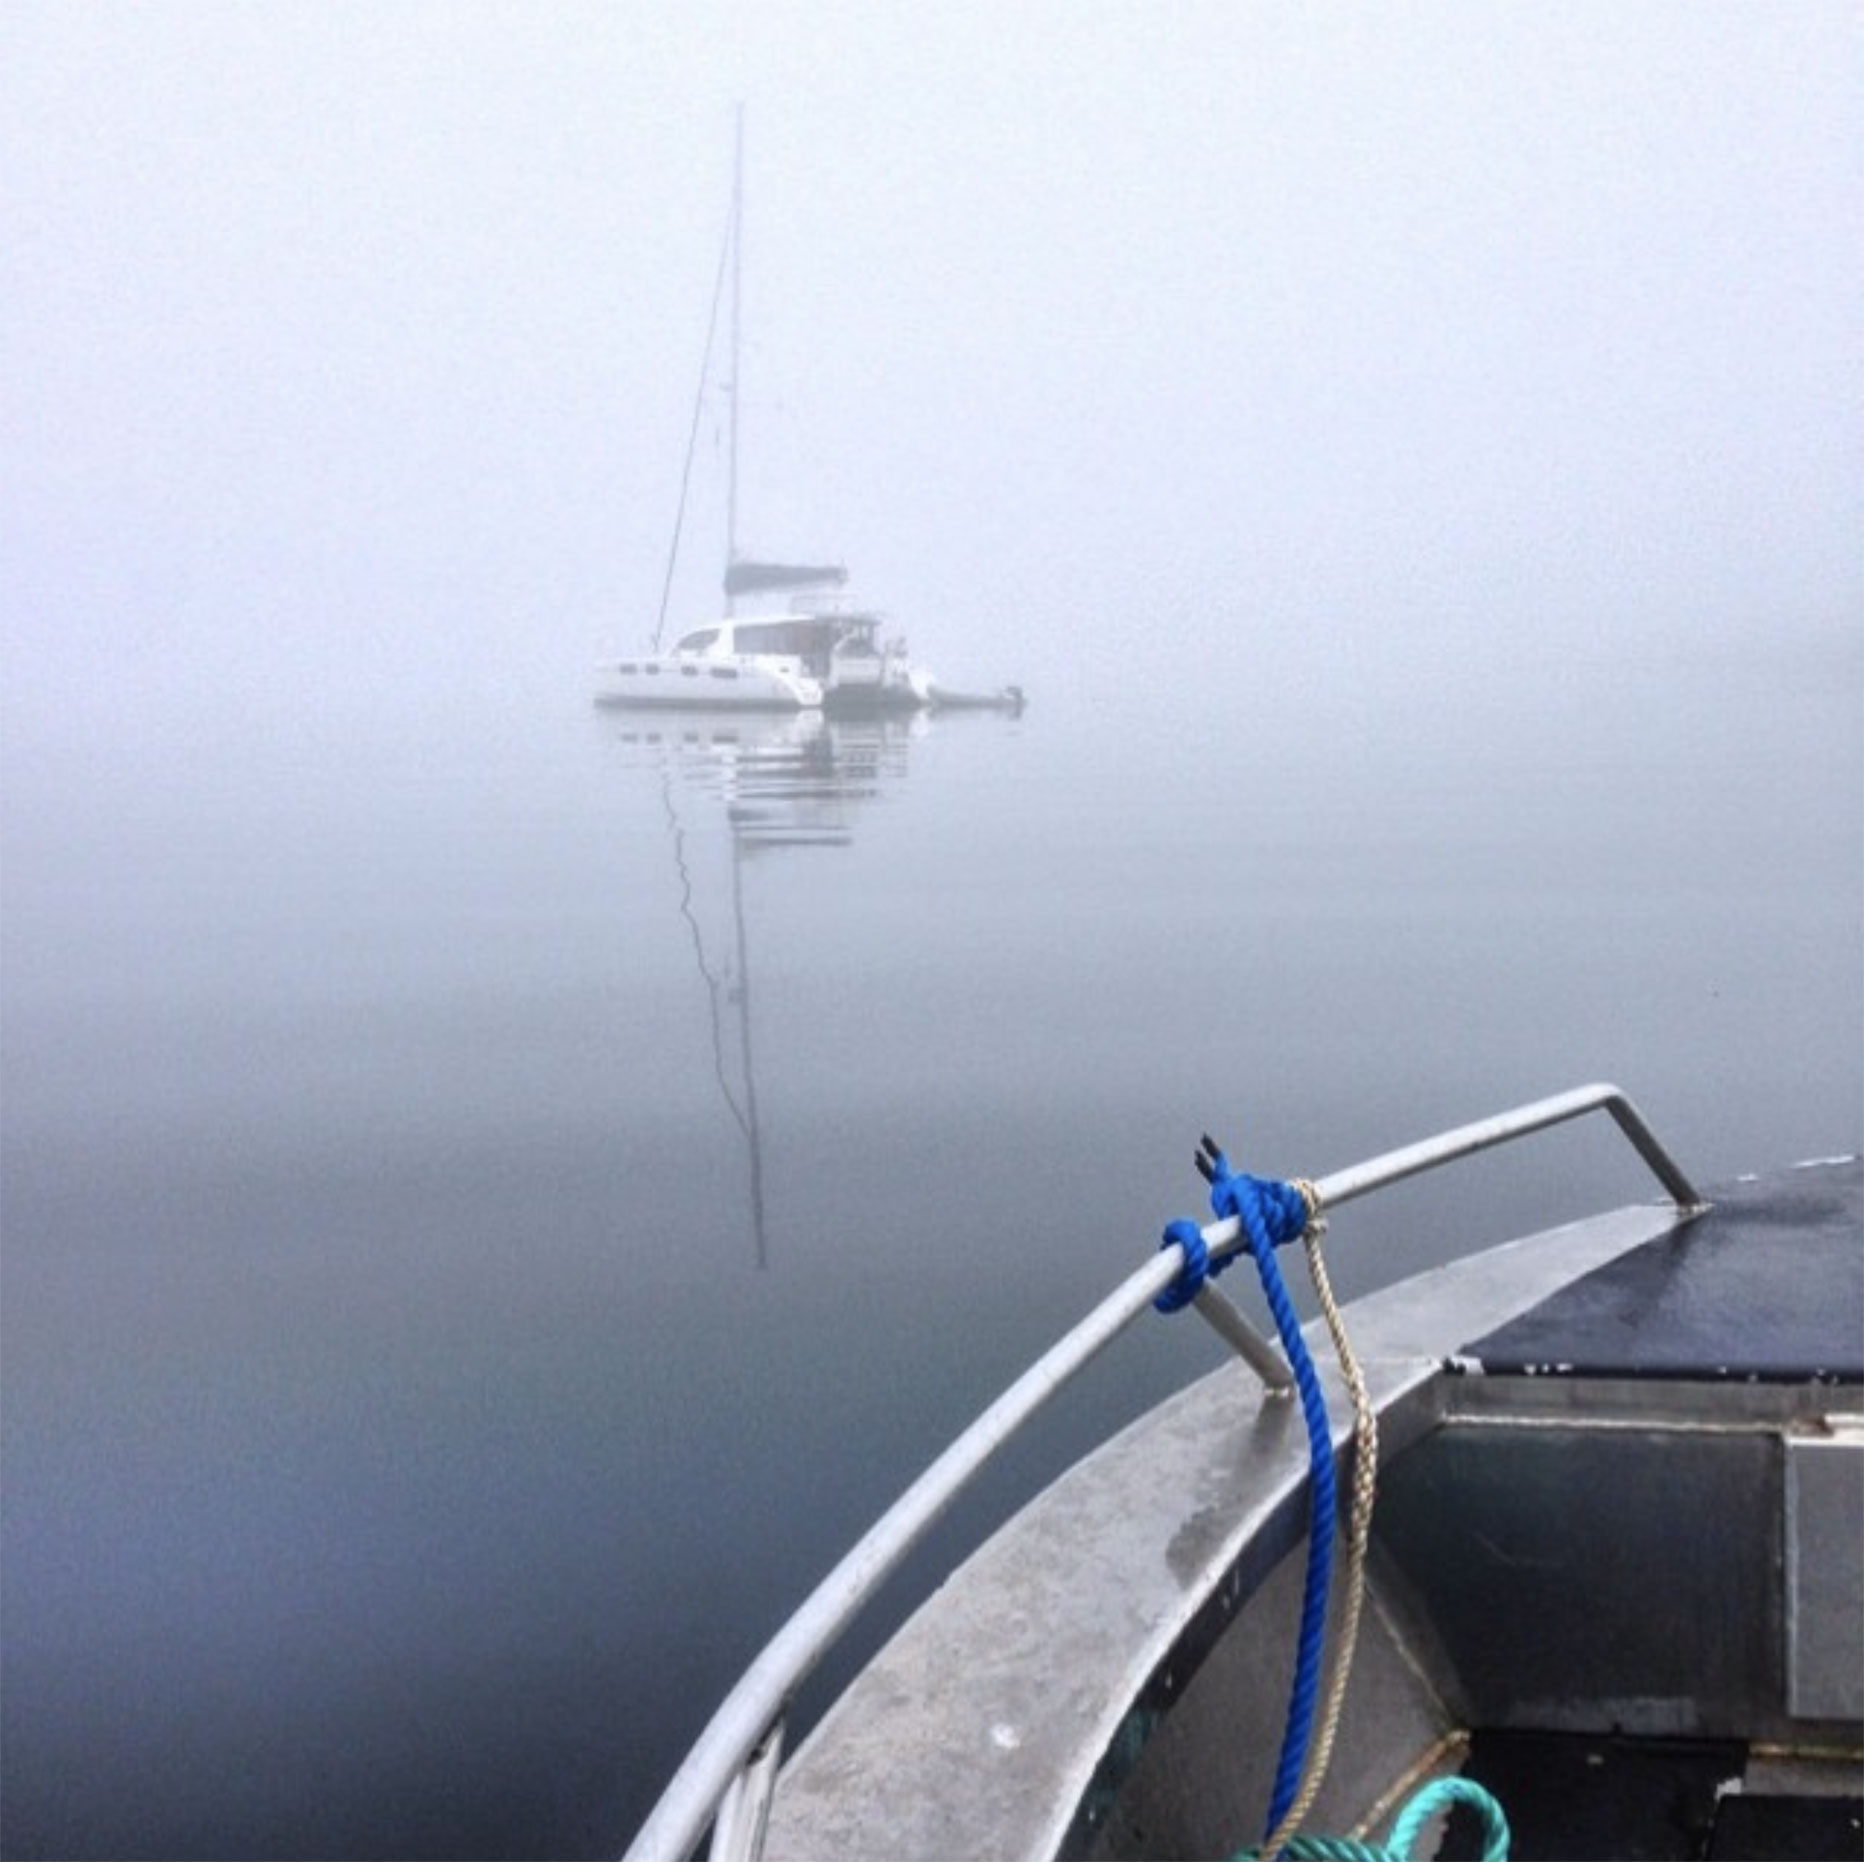 A photo of Ian McAllister's catamaran seen in the fog